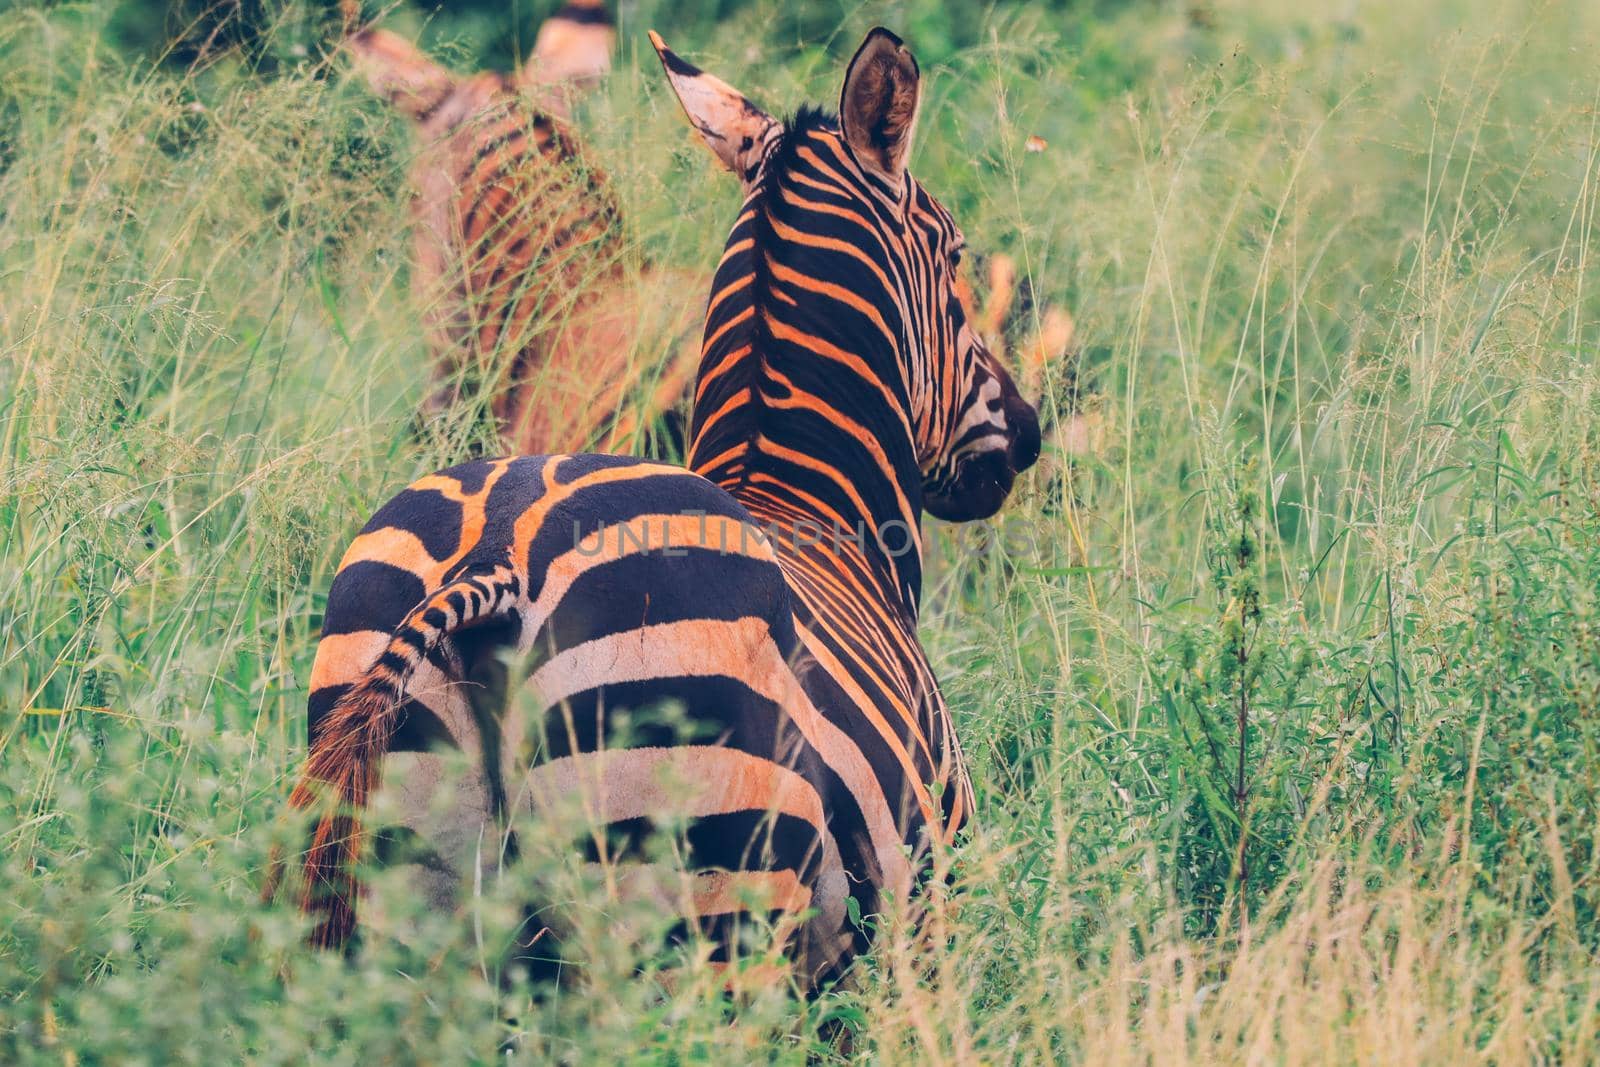 Zebras in Amboseli National Park, Kenya, Africa